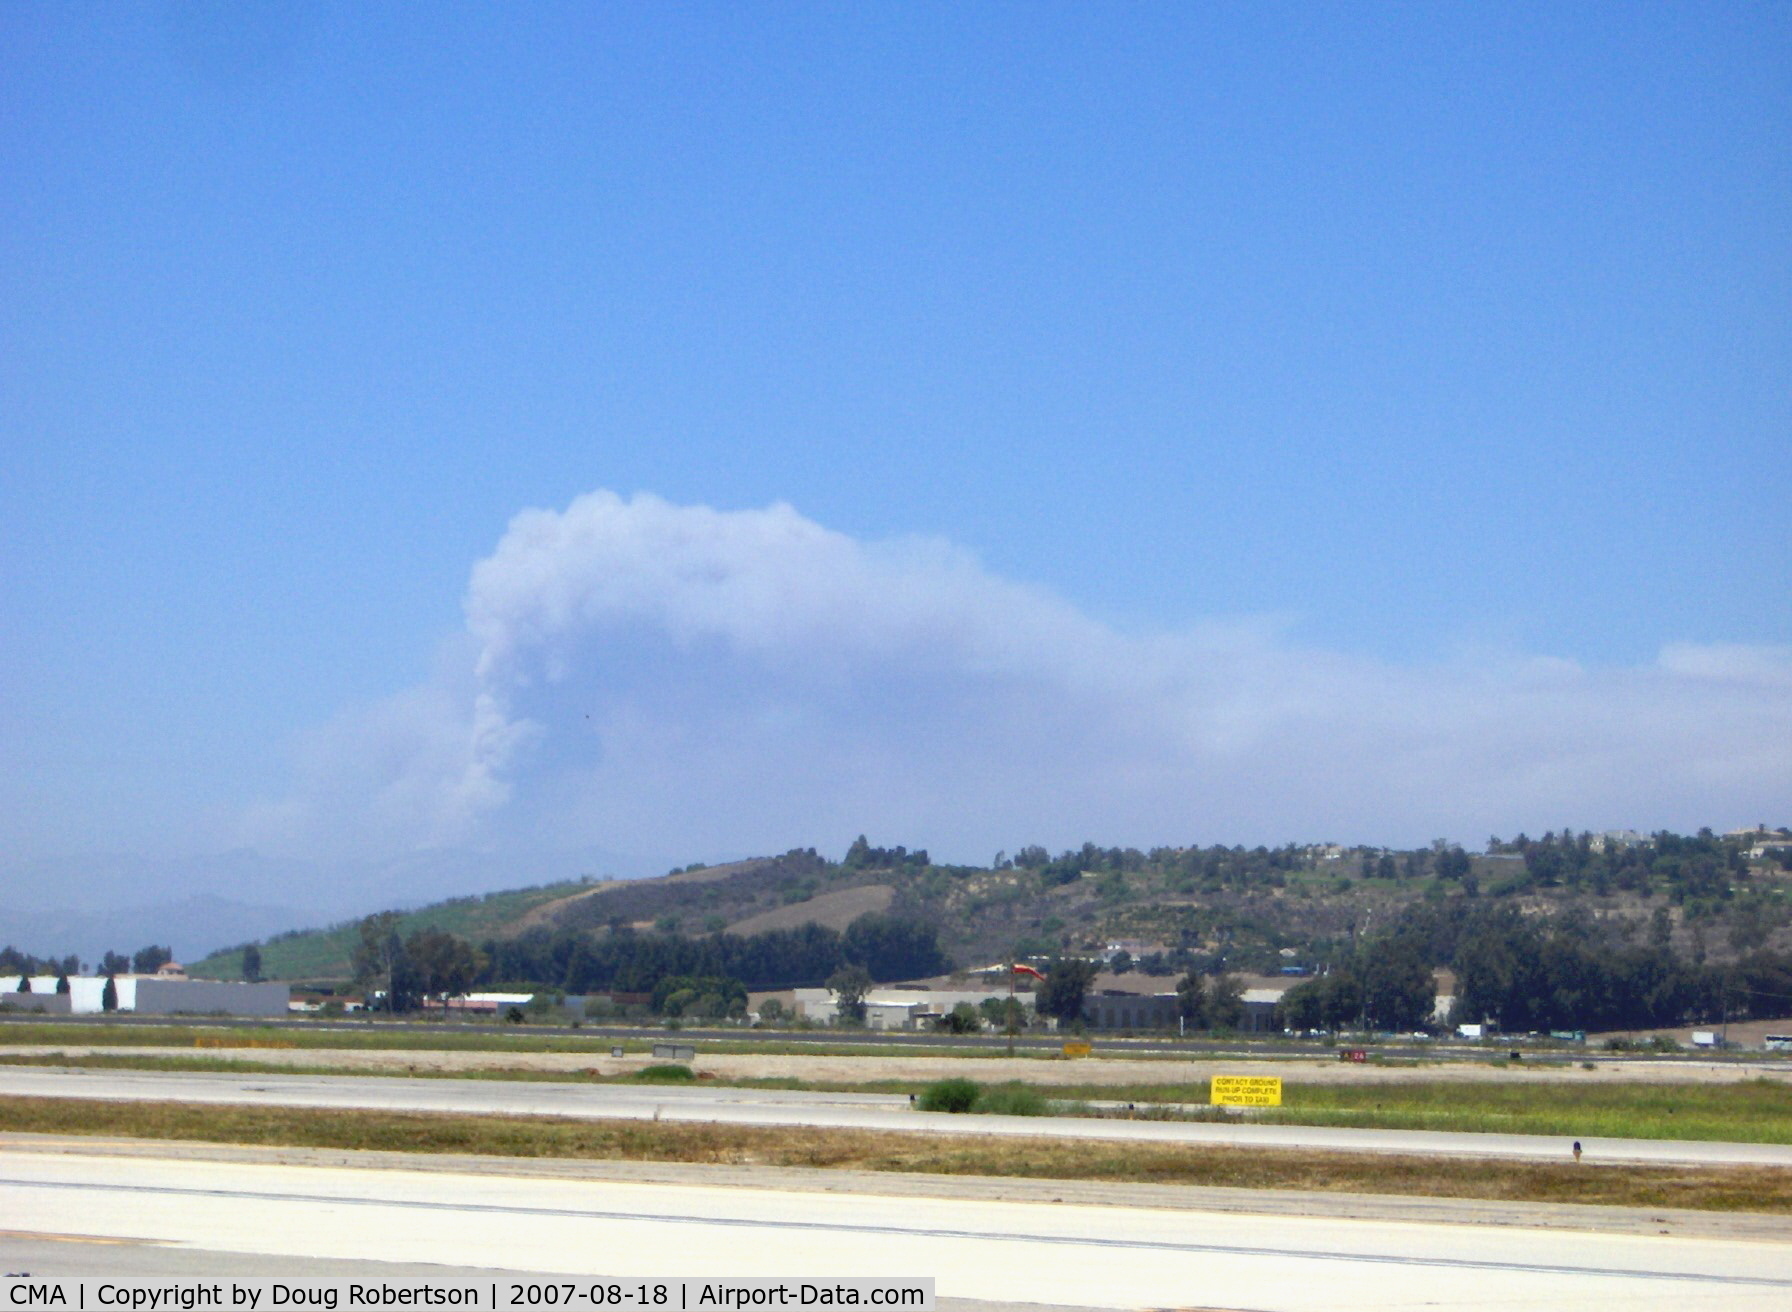 Camarillo Airport (CMA) - Zaca Fire Smoke Plume, burning since 4th of July